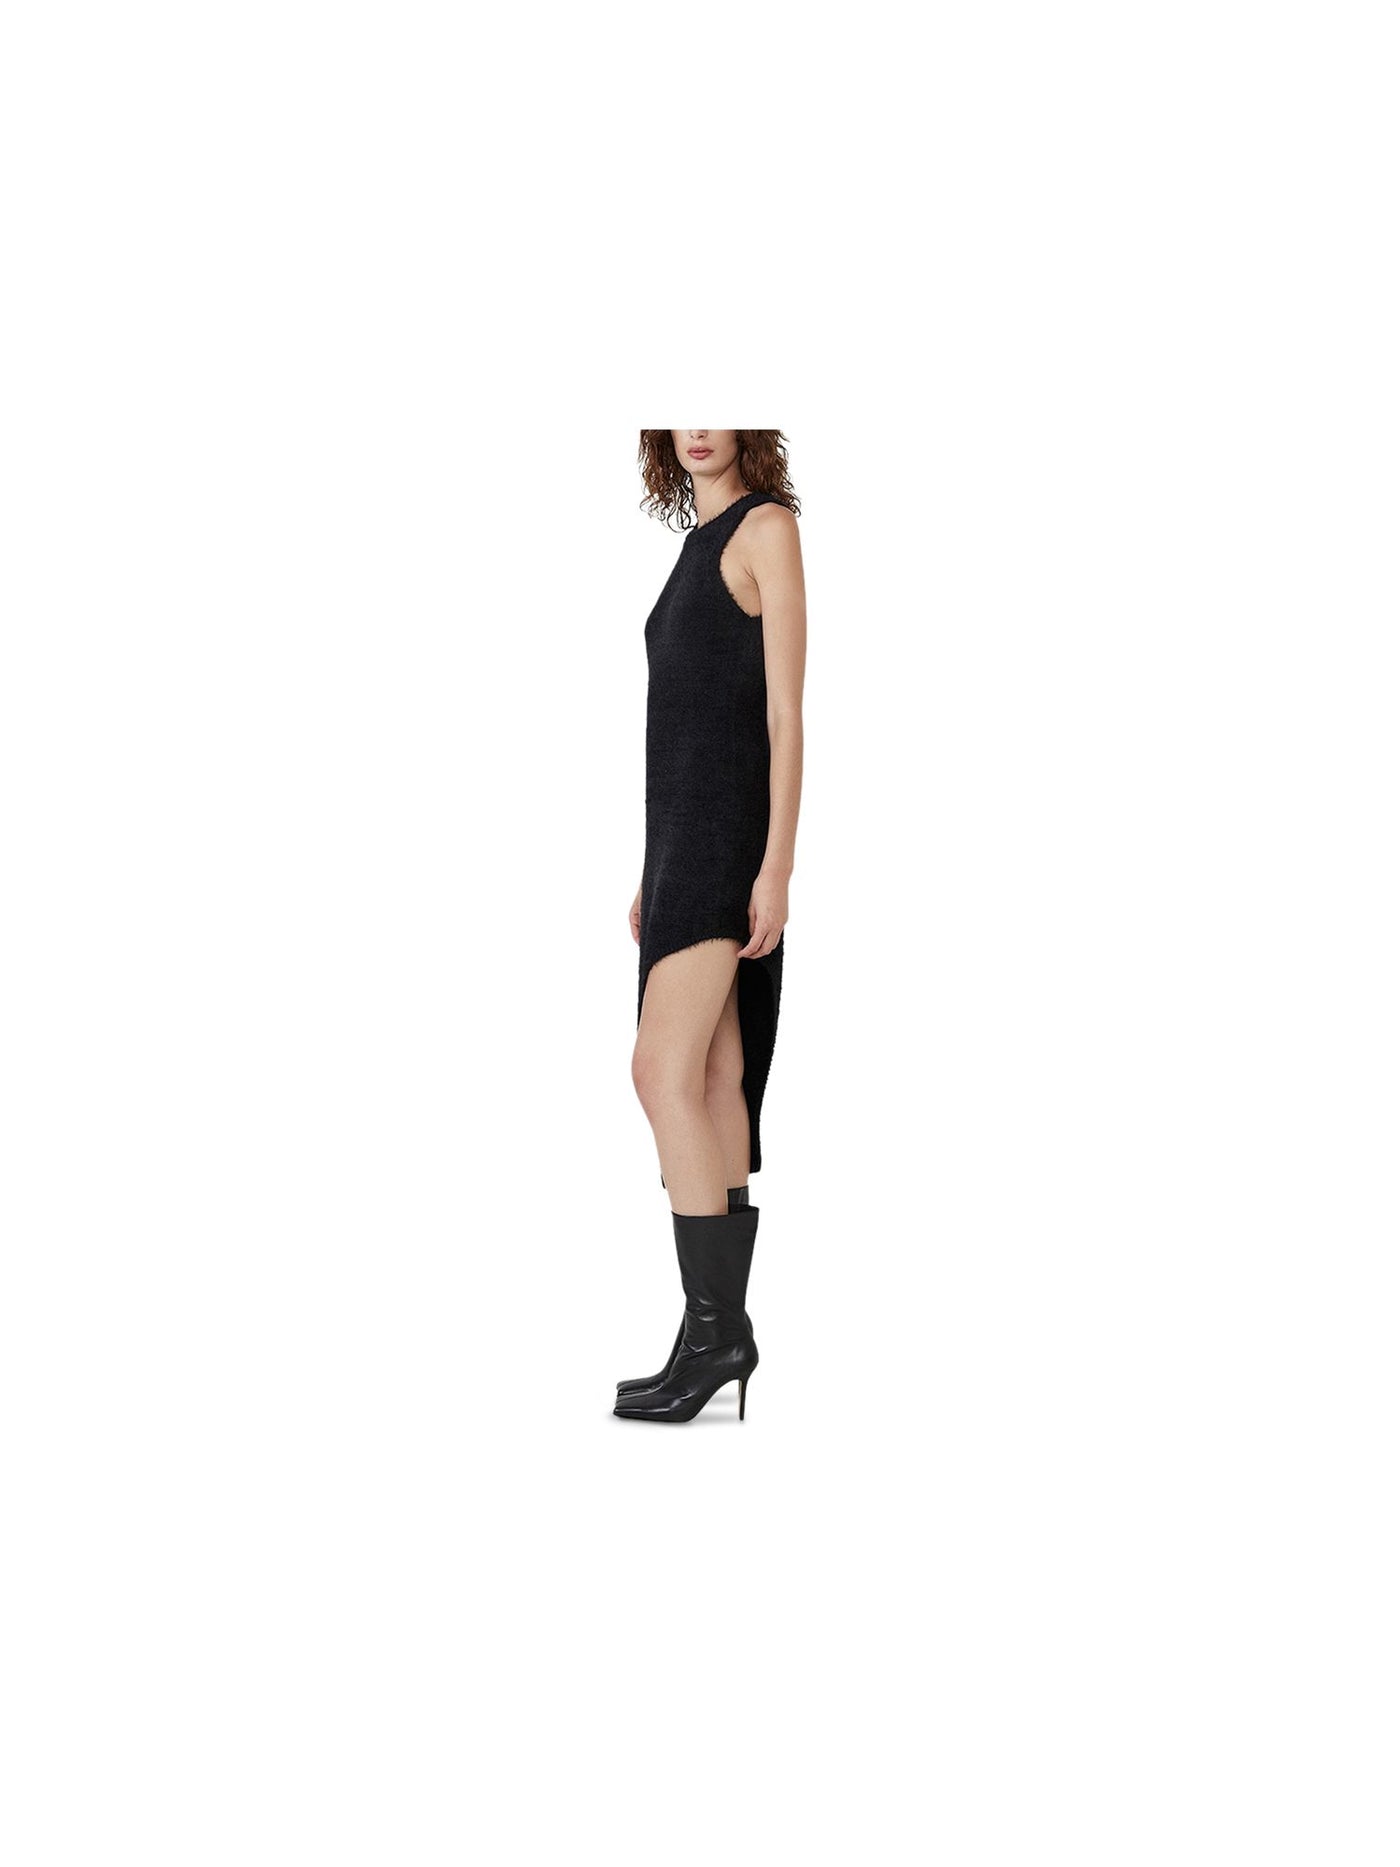 BARDOT Womens Black Textured Asymmetrical Hem Unlined Sleeveless Round Neck Tea-Length Evening Shift Dress XL